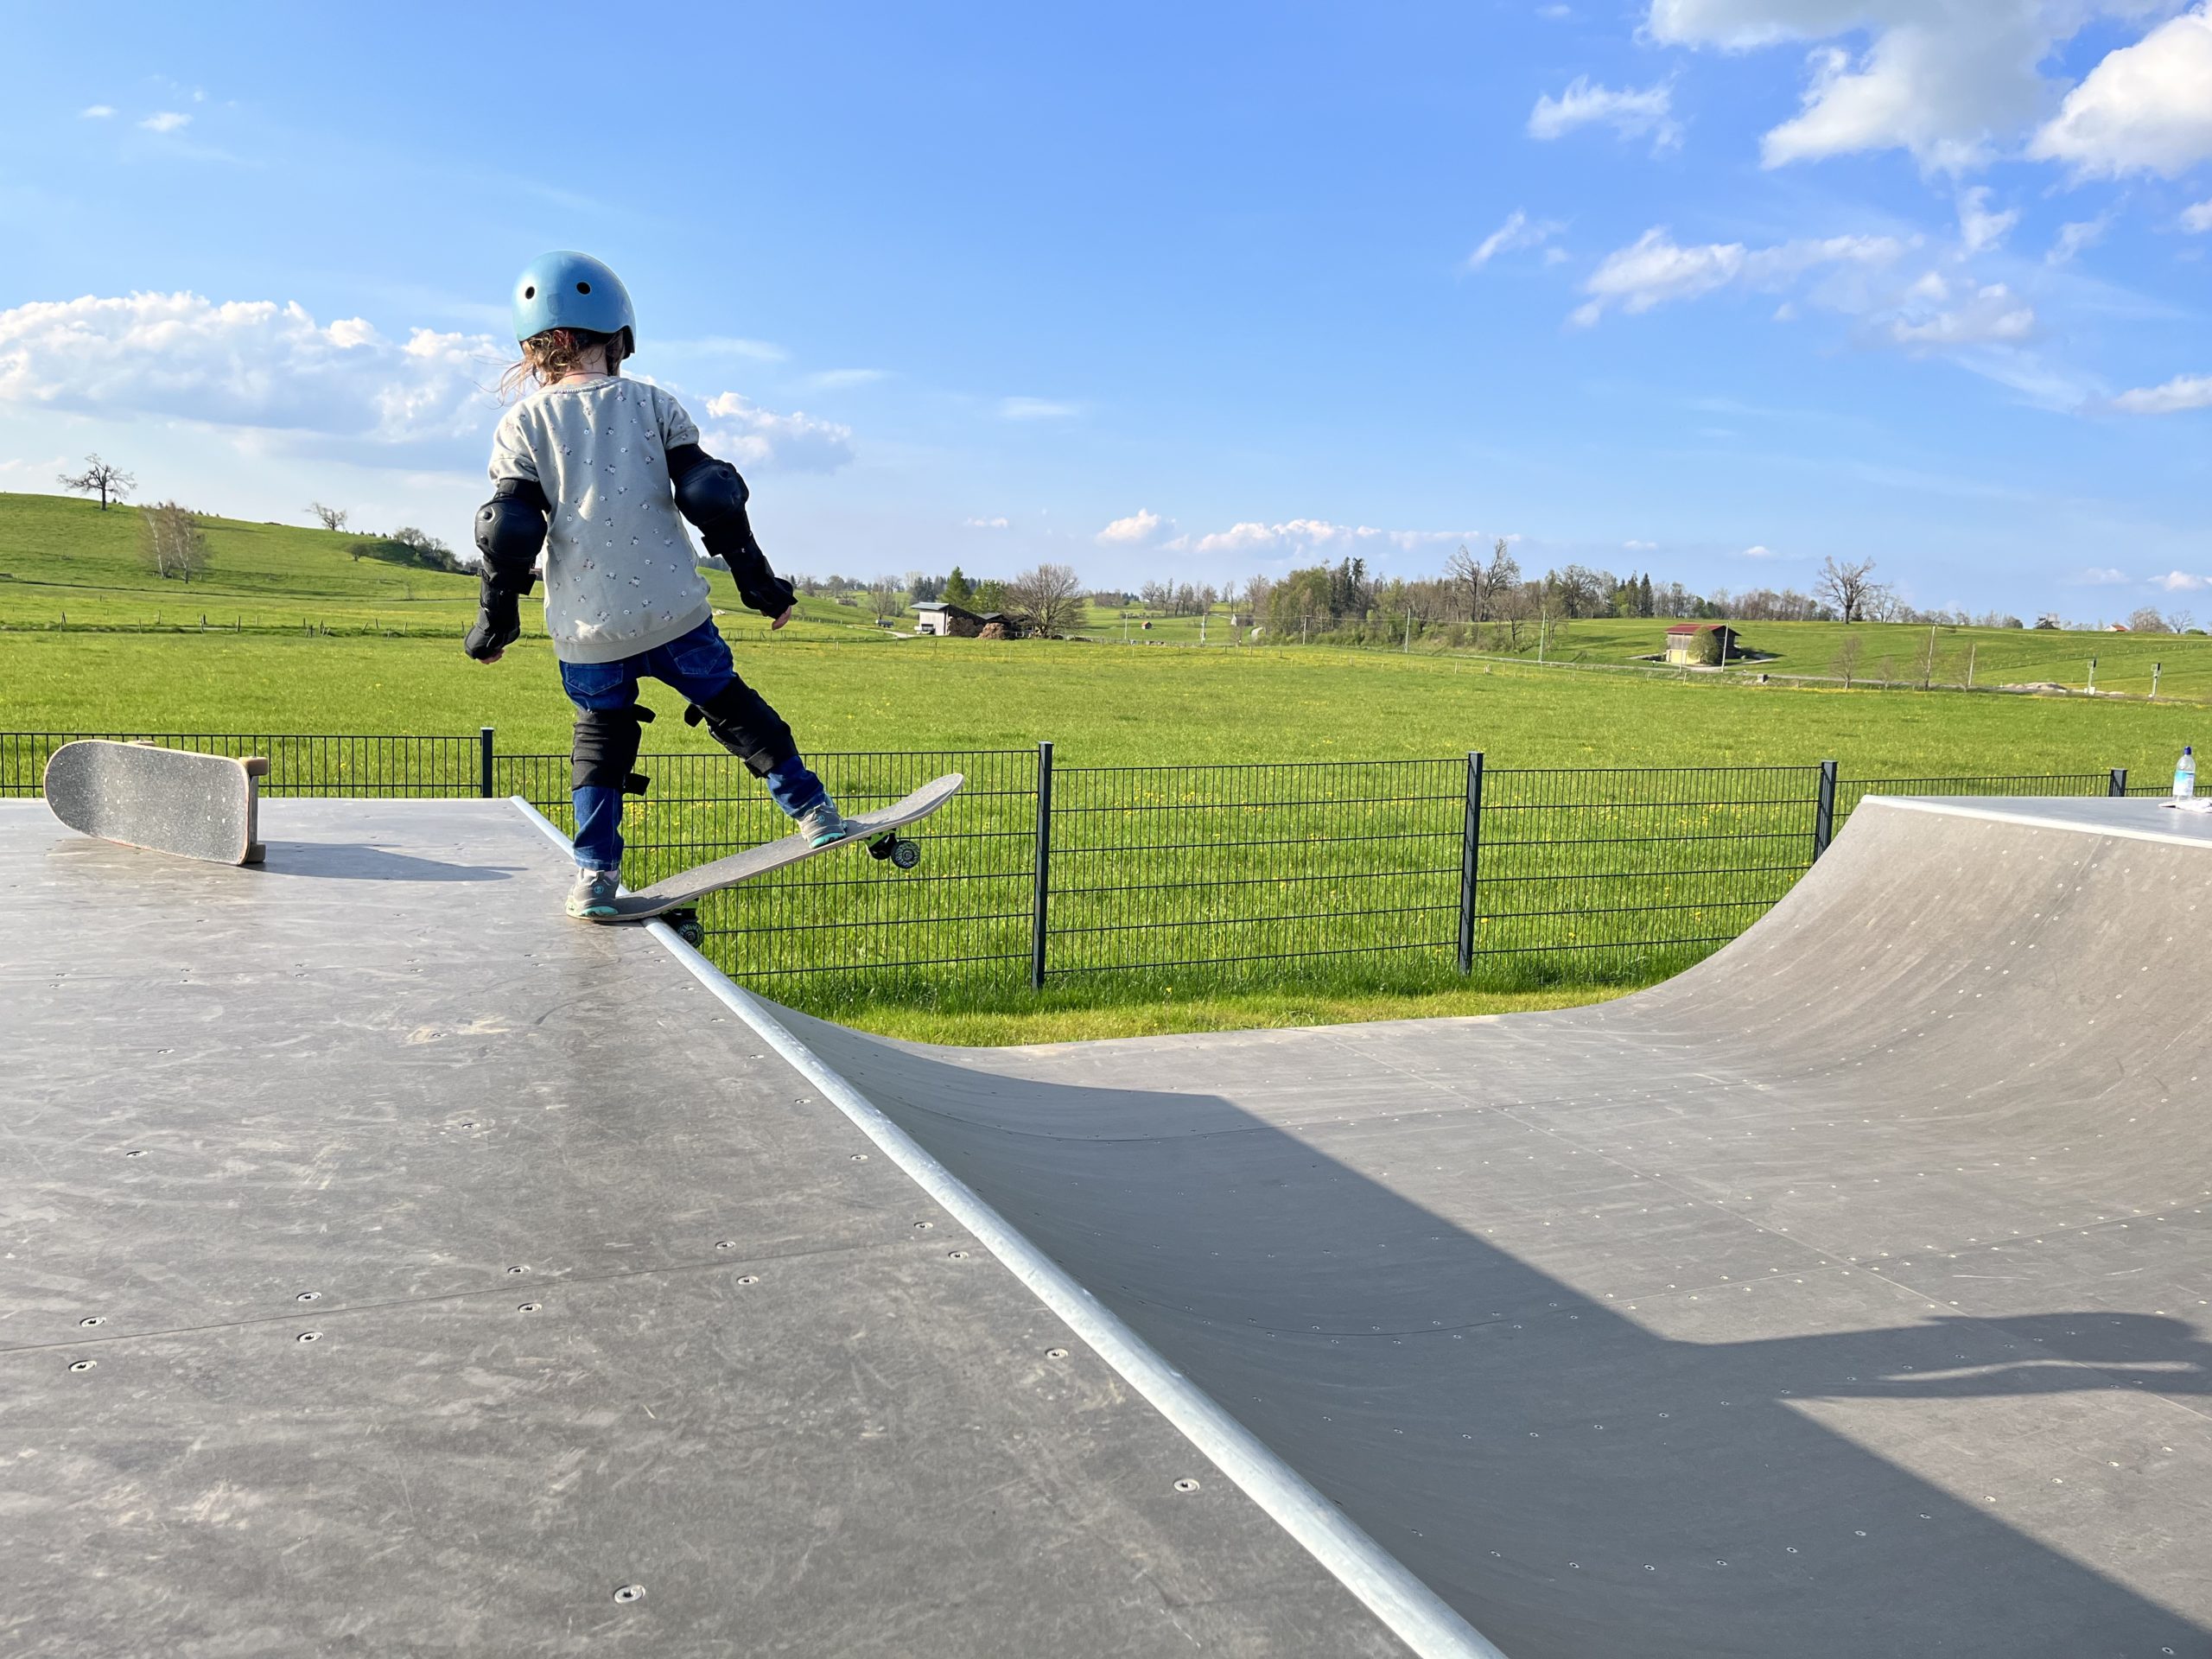 GoSkate! Skateboardschule - Peißenberg, Landkreis Weilheim-Schongau